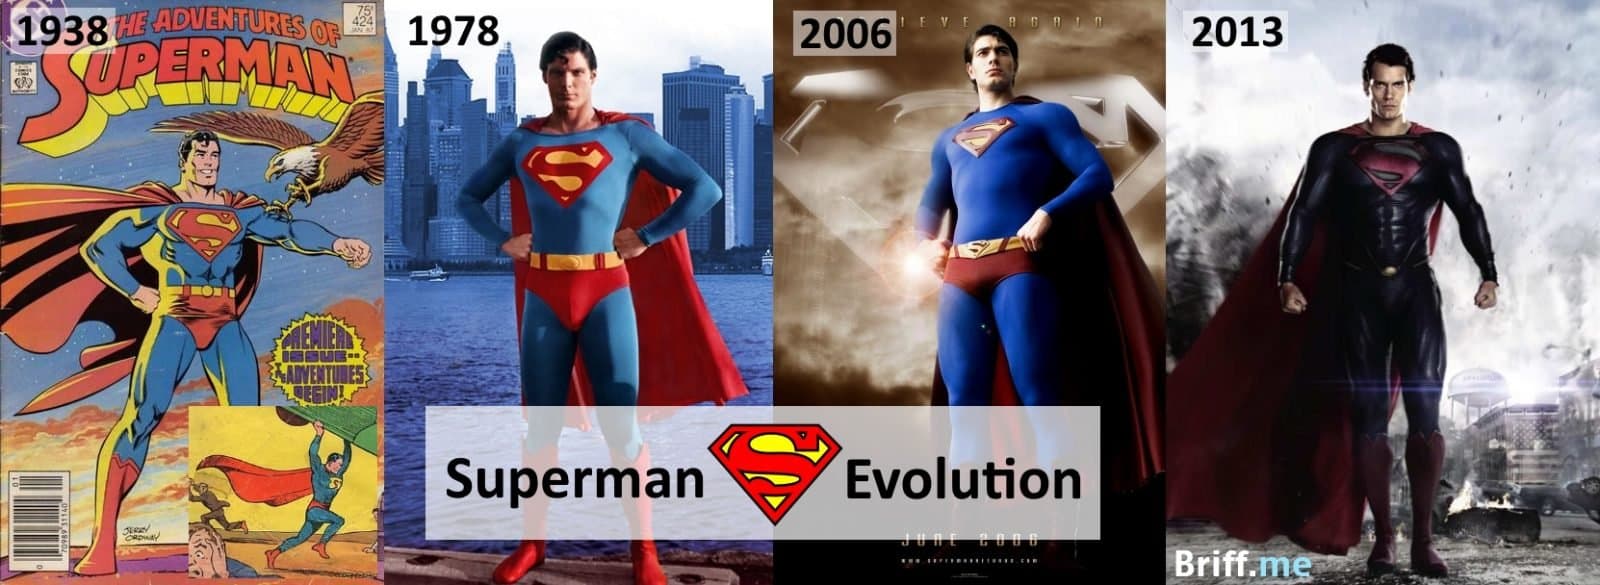 Superhero Evolution Superman 1938-2013